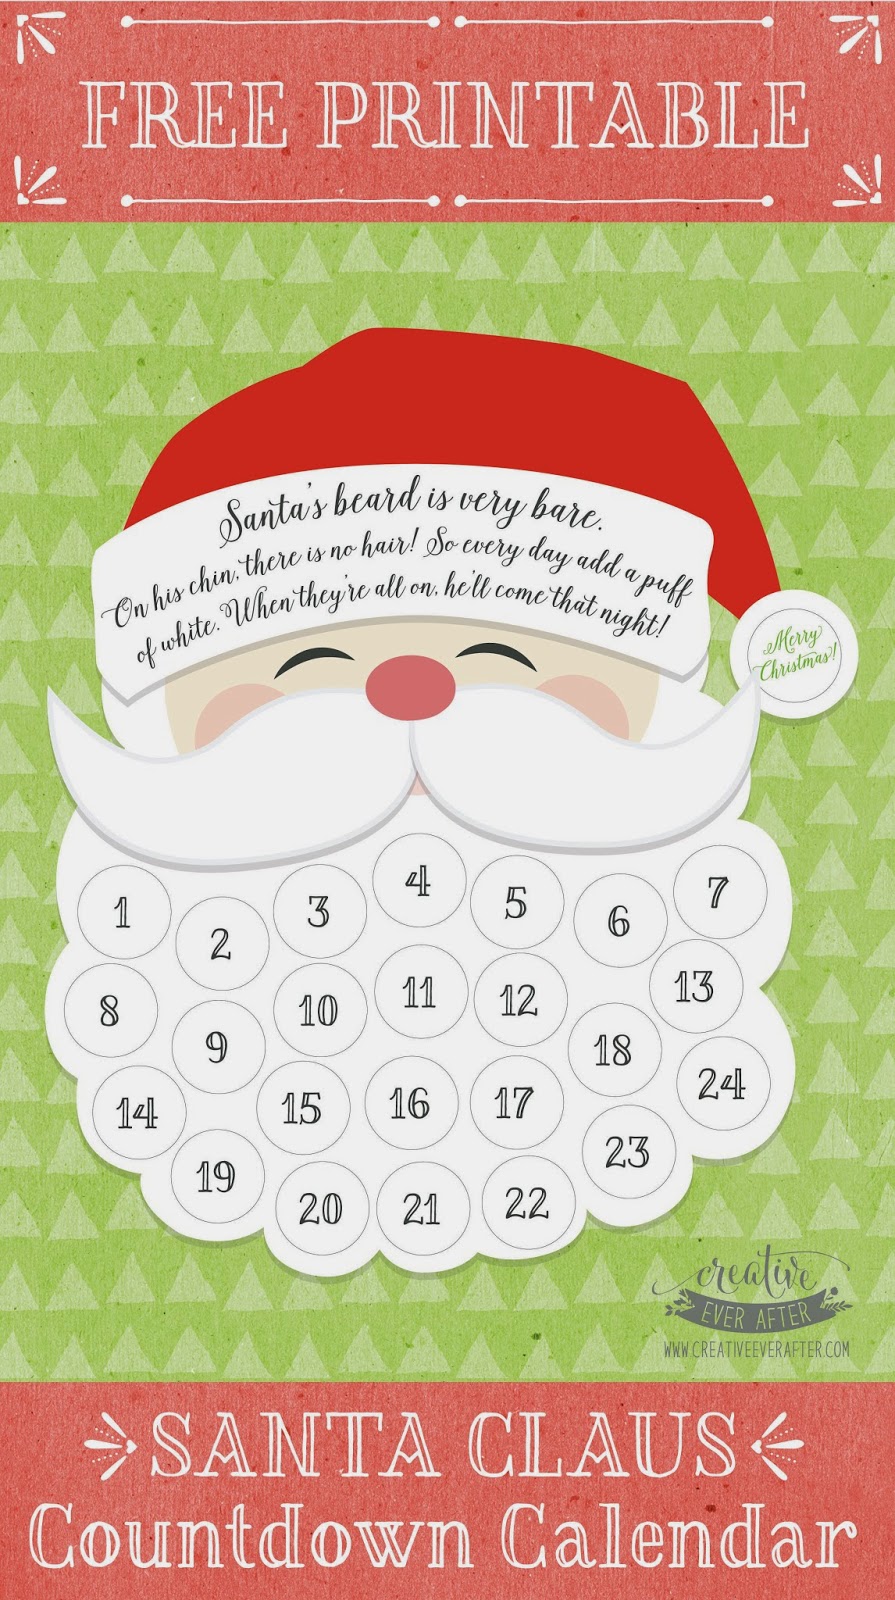 Download {Free Printable} Santa Claus Beard Countdown Calendar | Creative Ever After